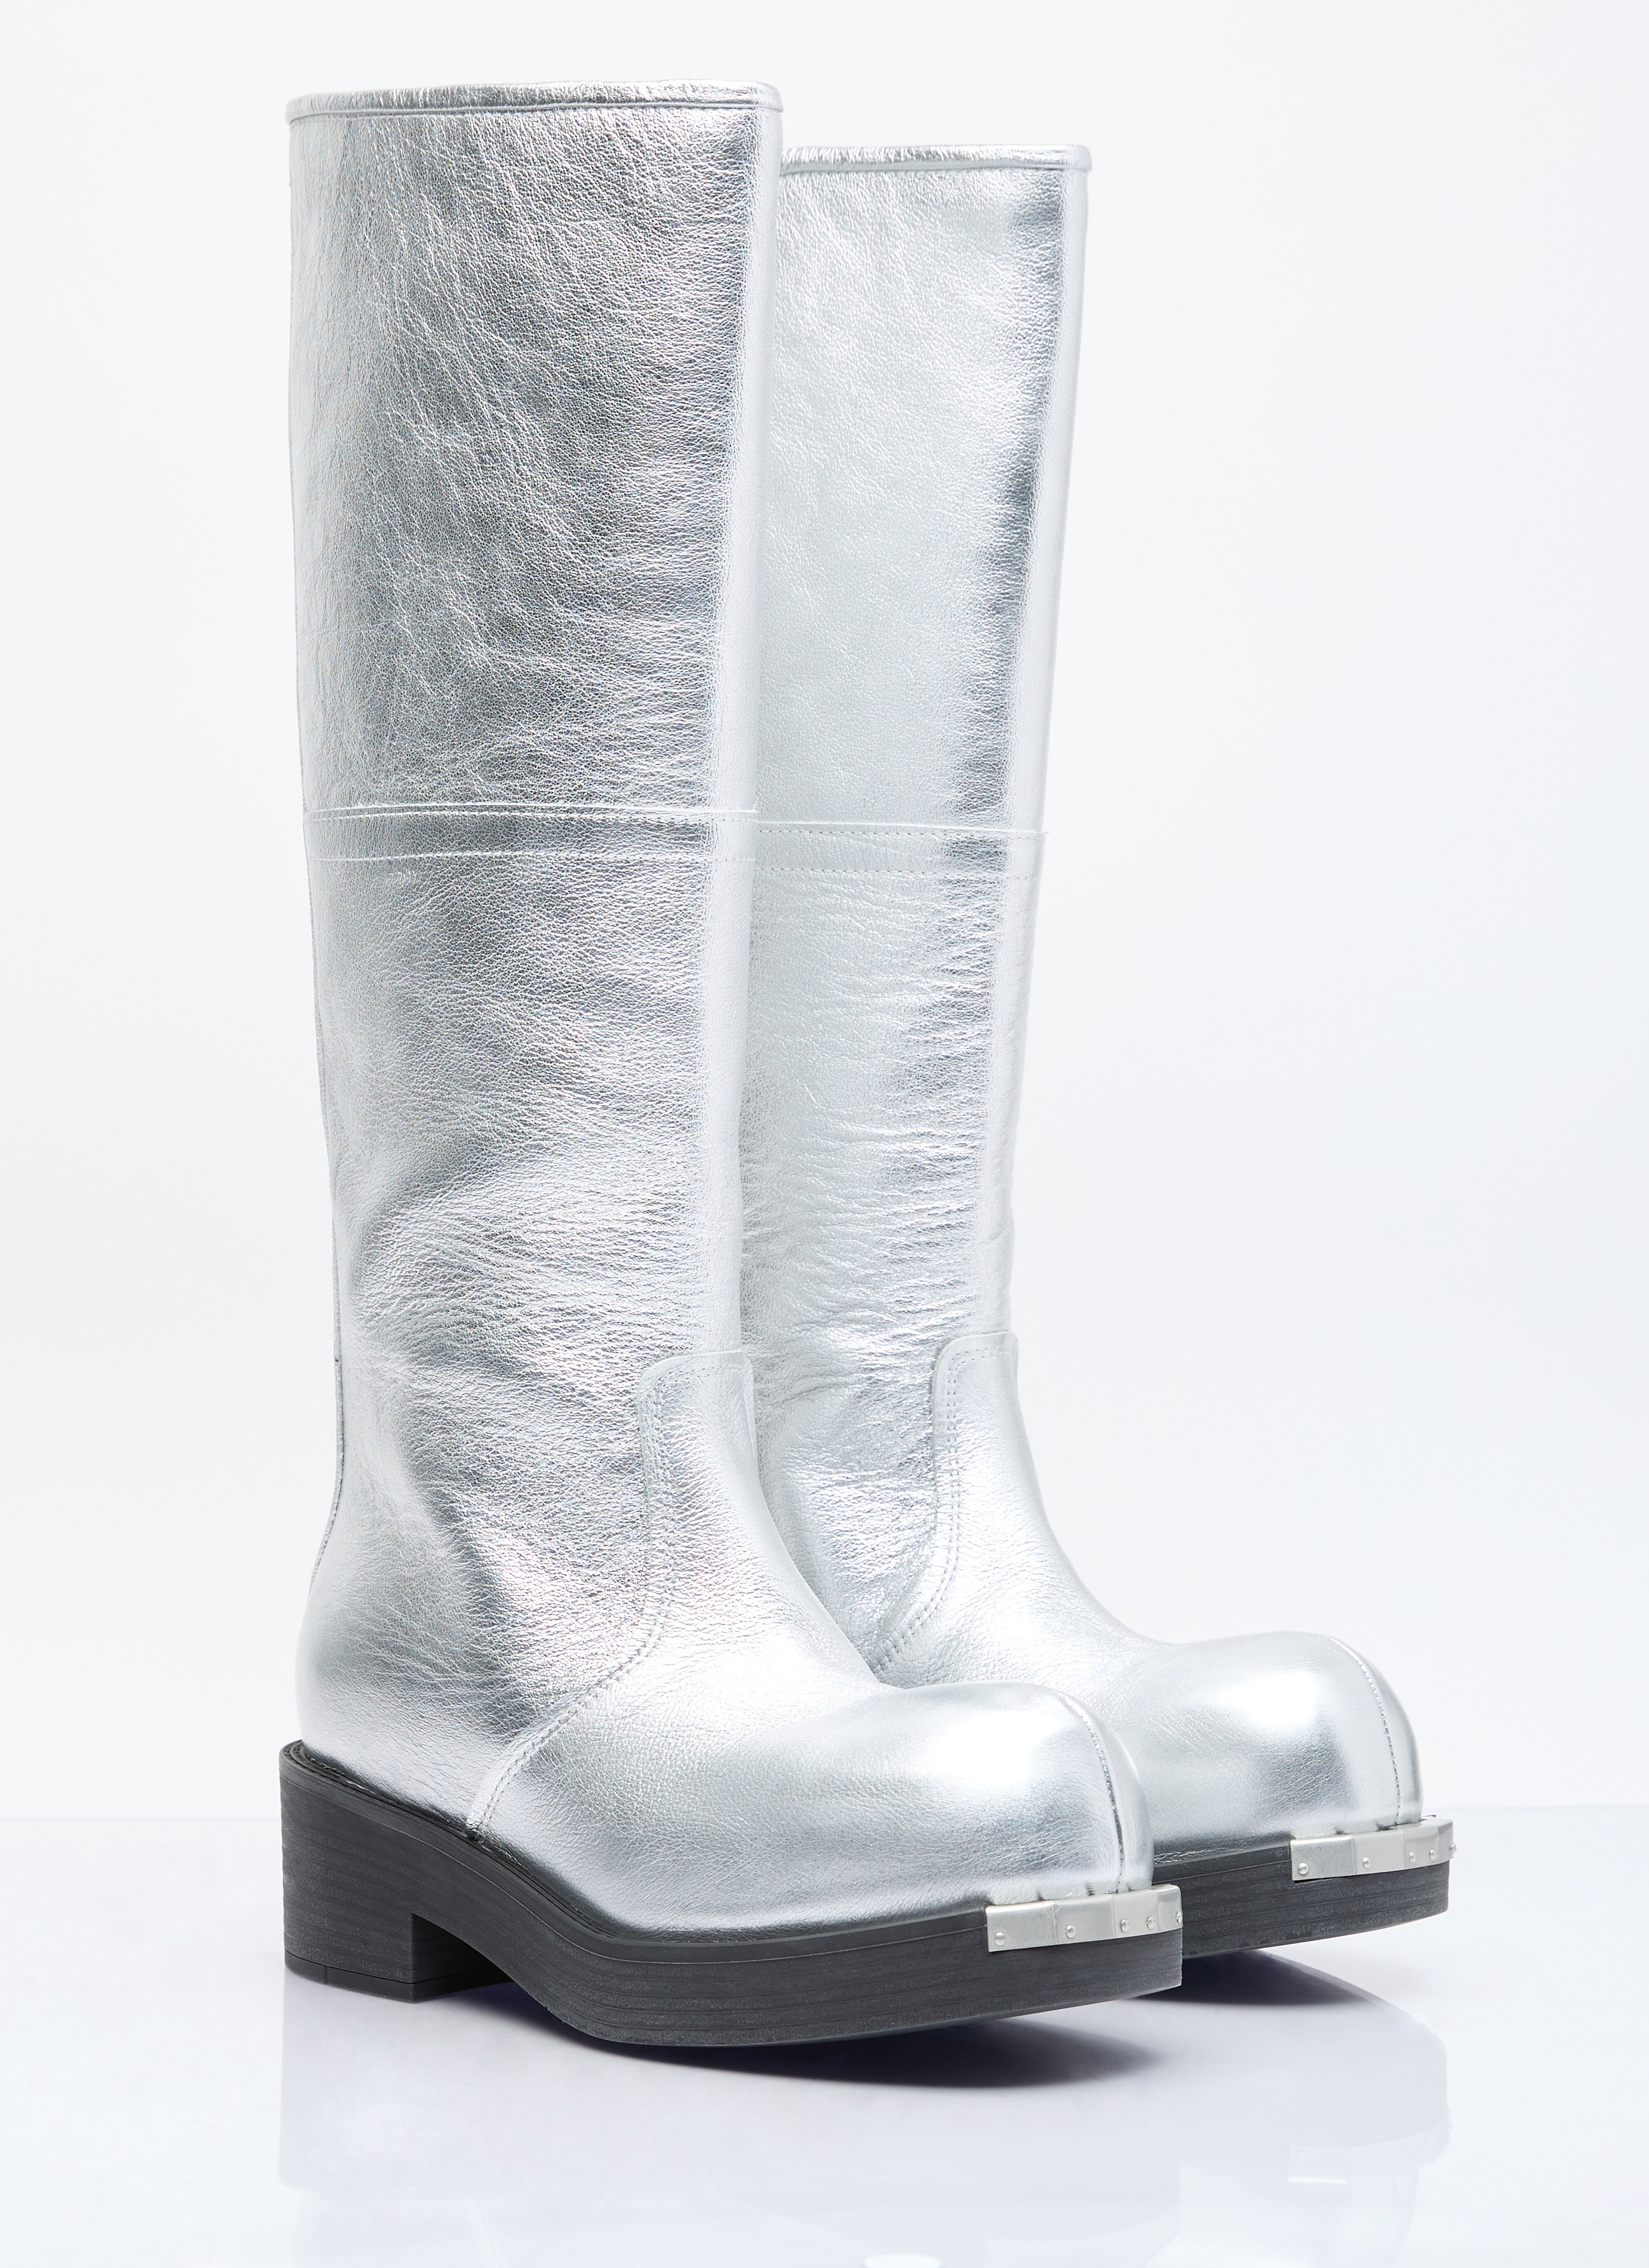 MM6 Maison Margiela Women's Knee-High Metallic Boots in Silver 